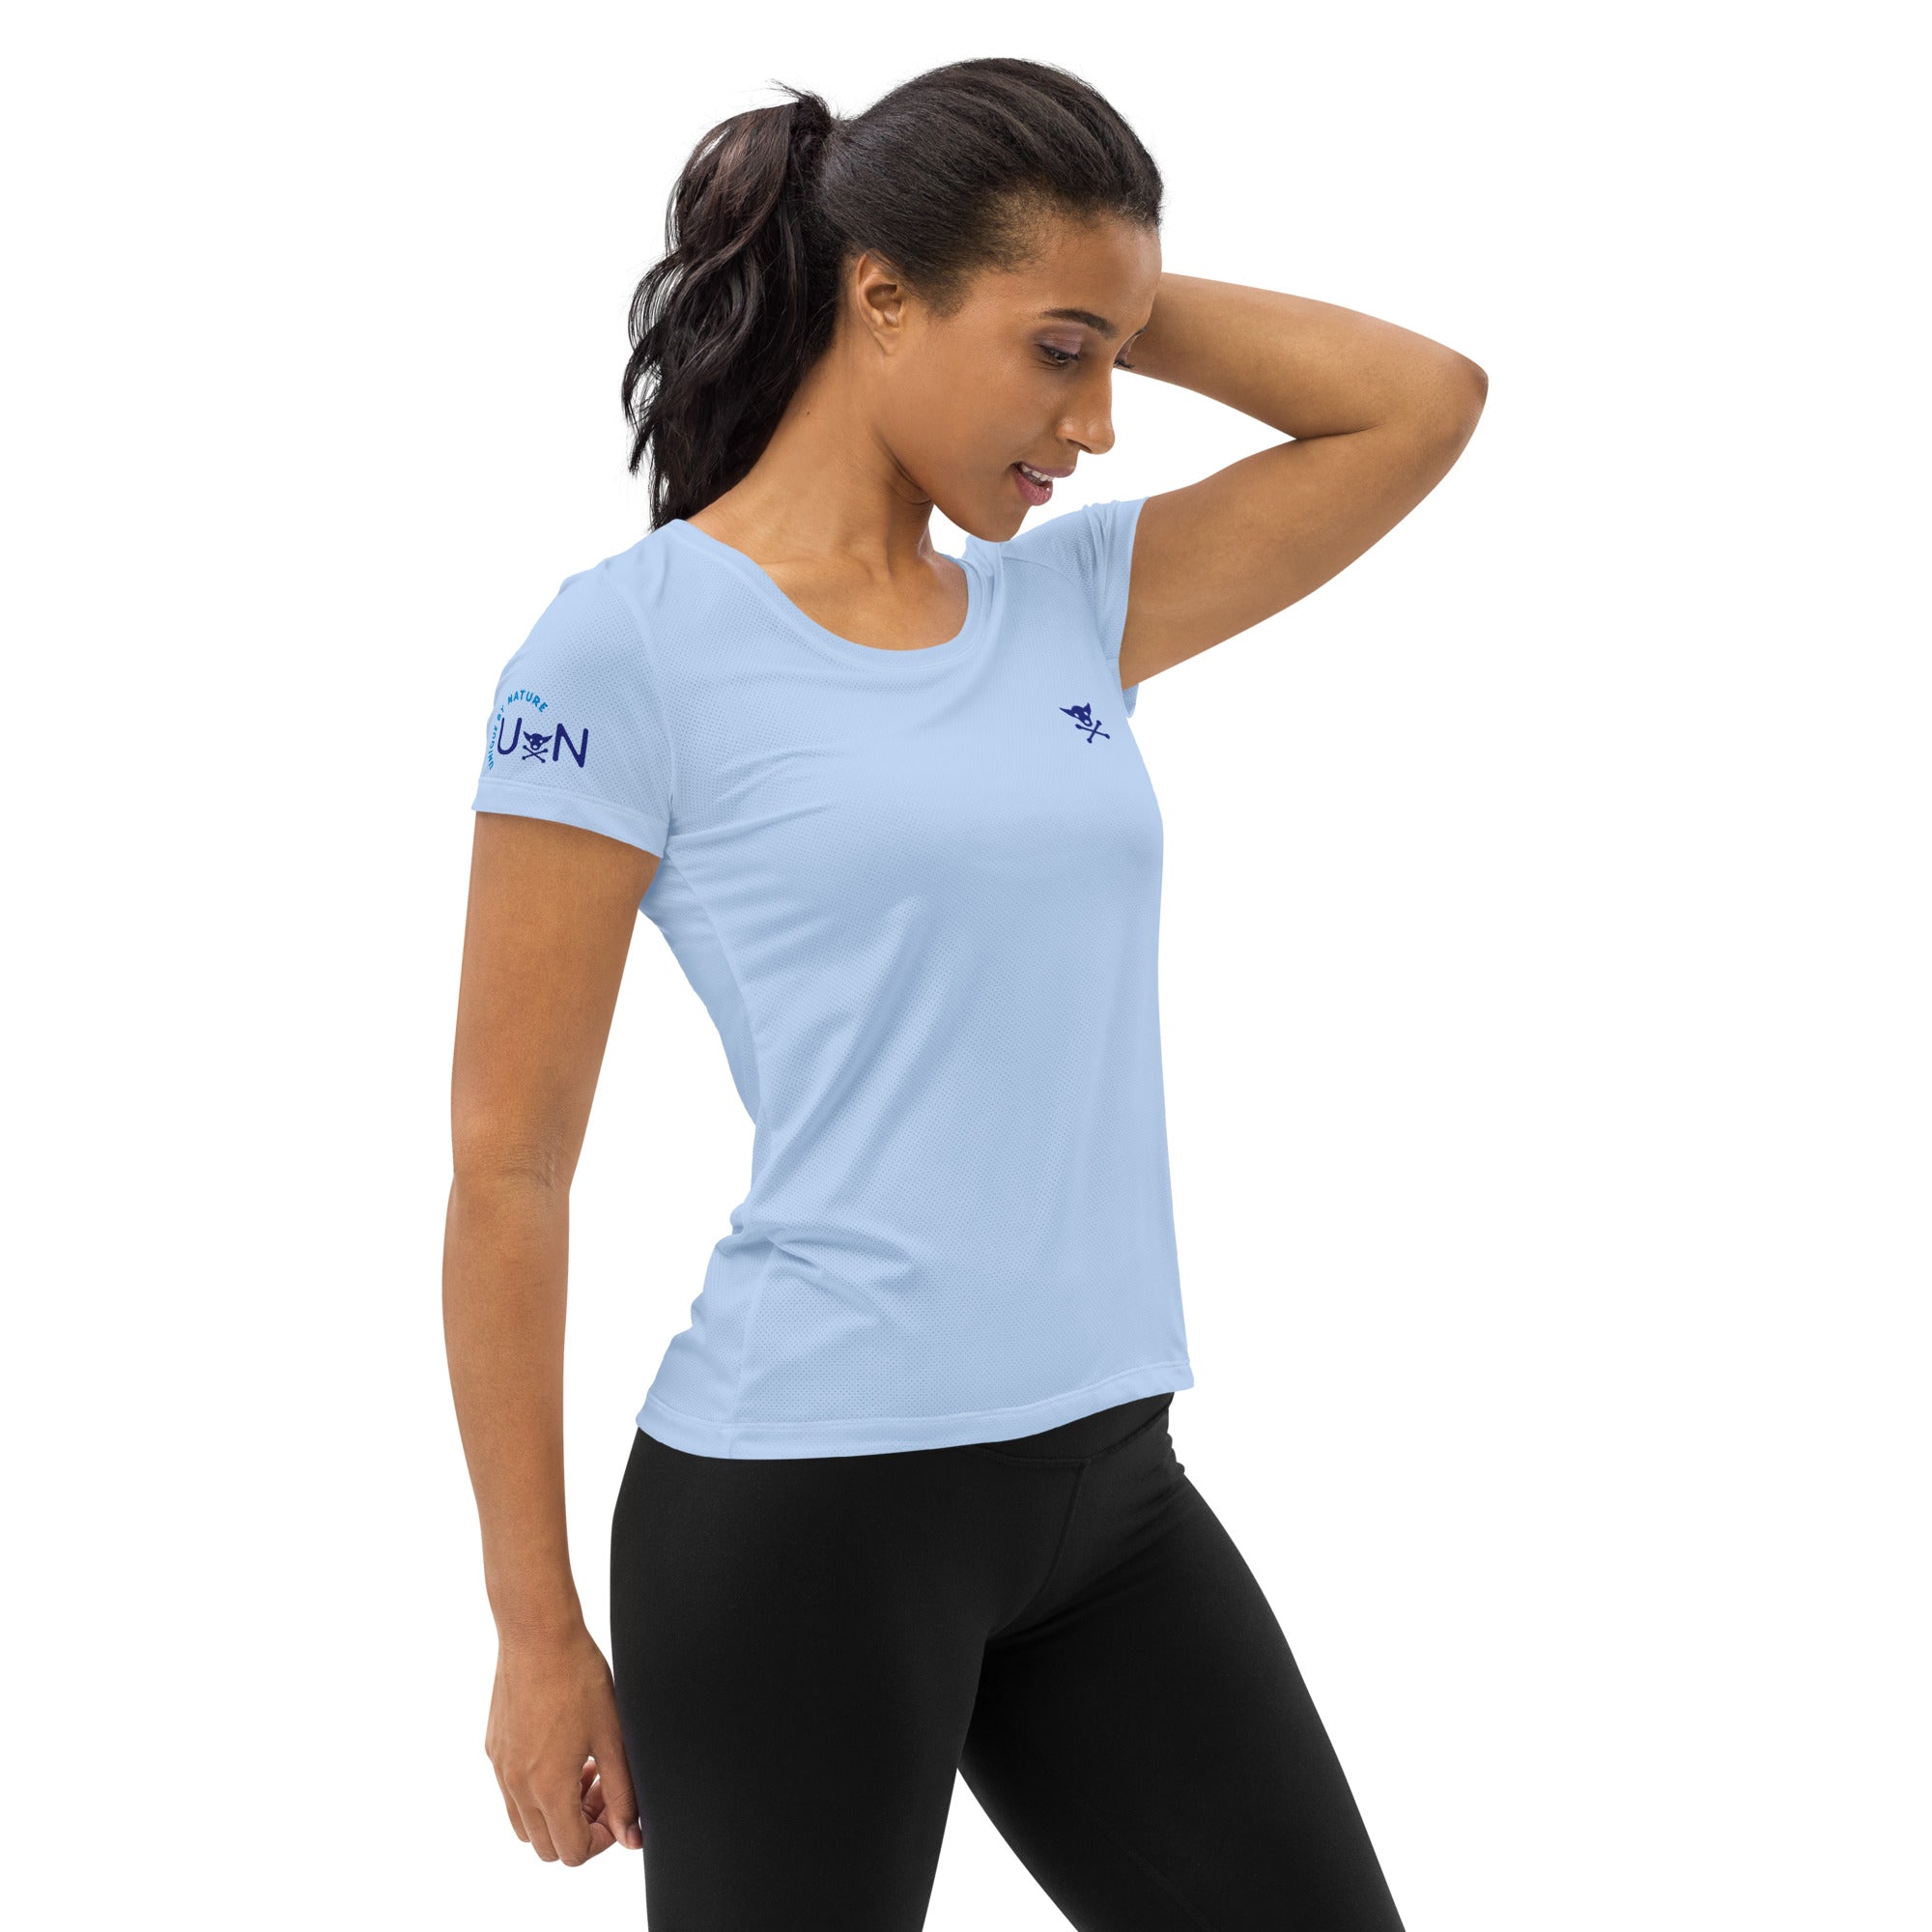 UxN Women's Athletic Shirt Lt Blue